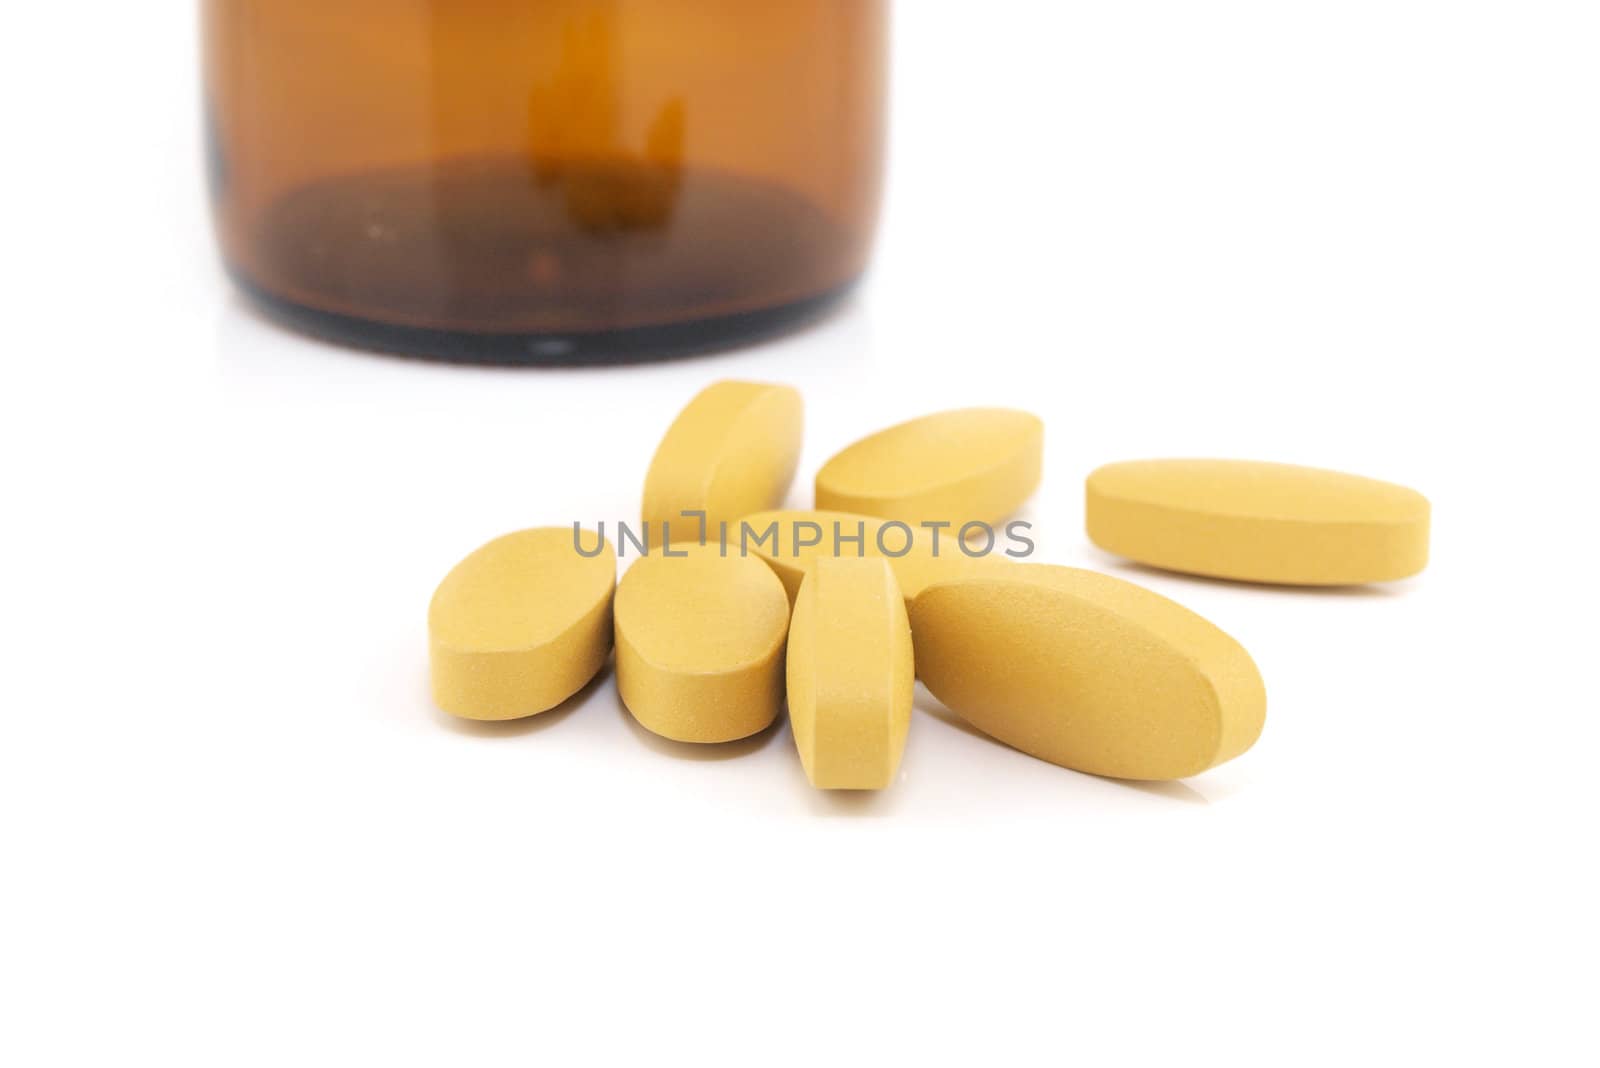 Vitamin C pills with medicine bottle background by jakgree